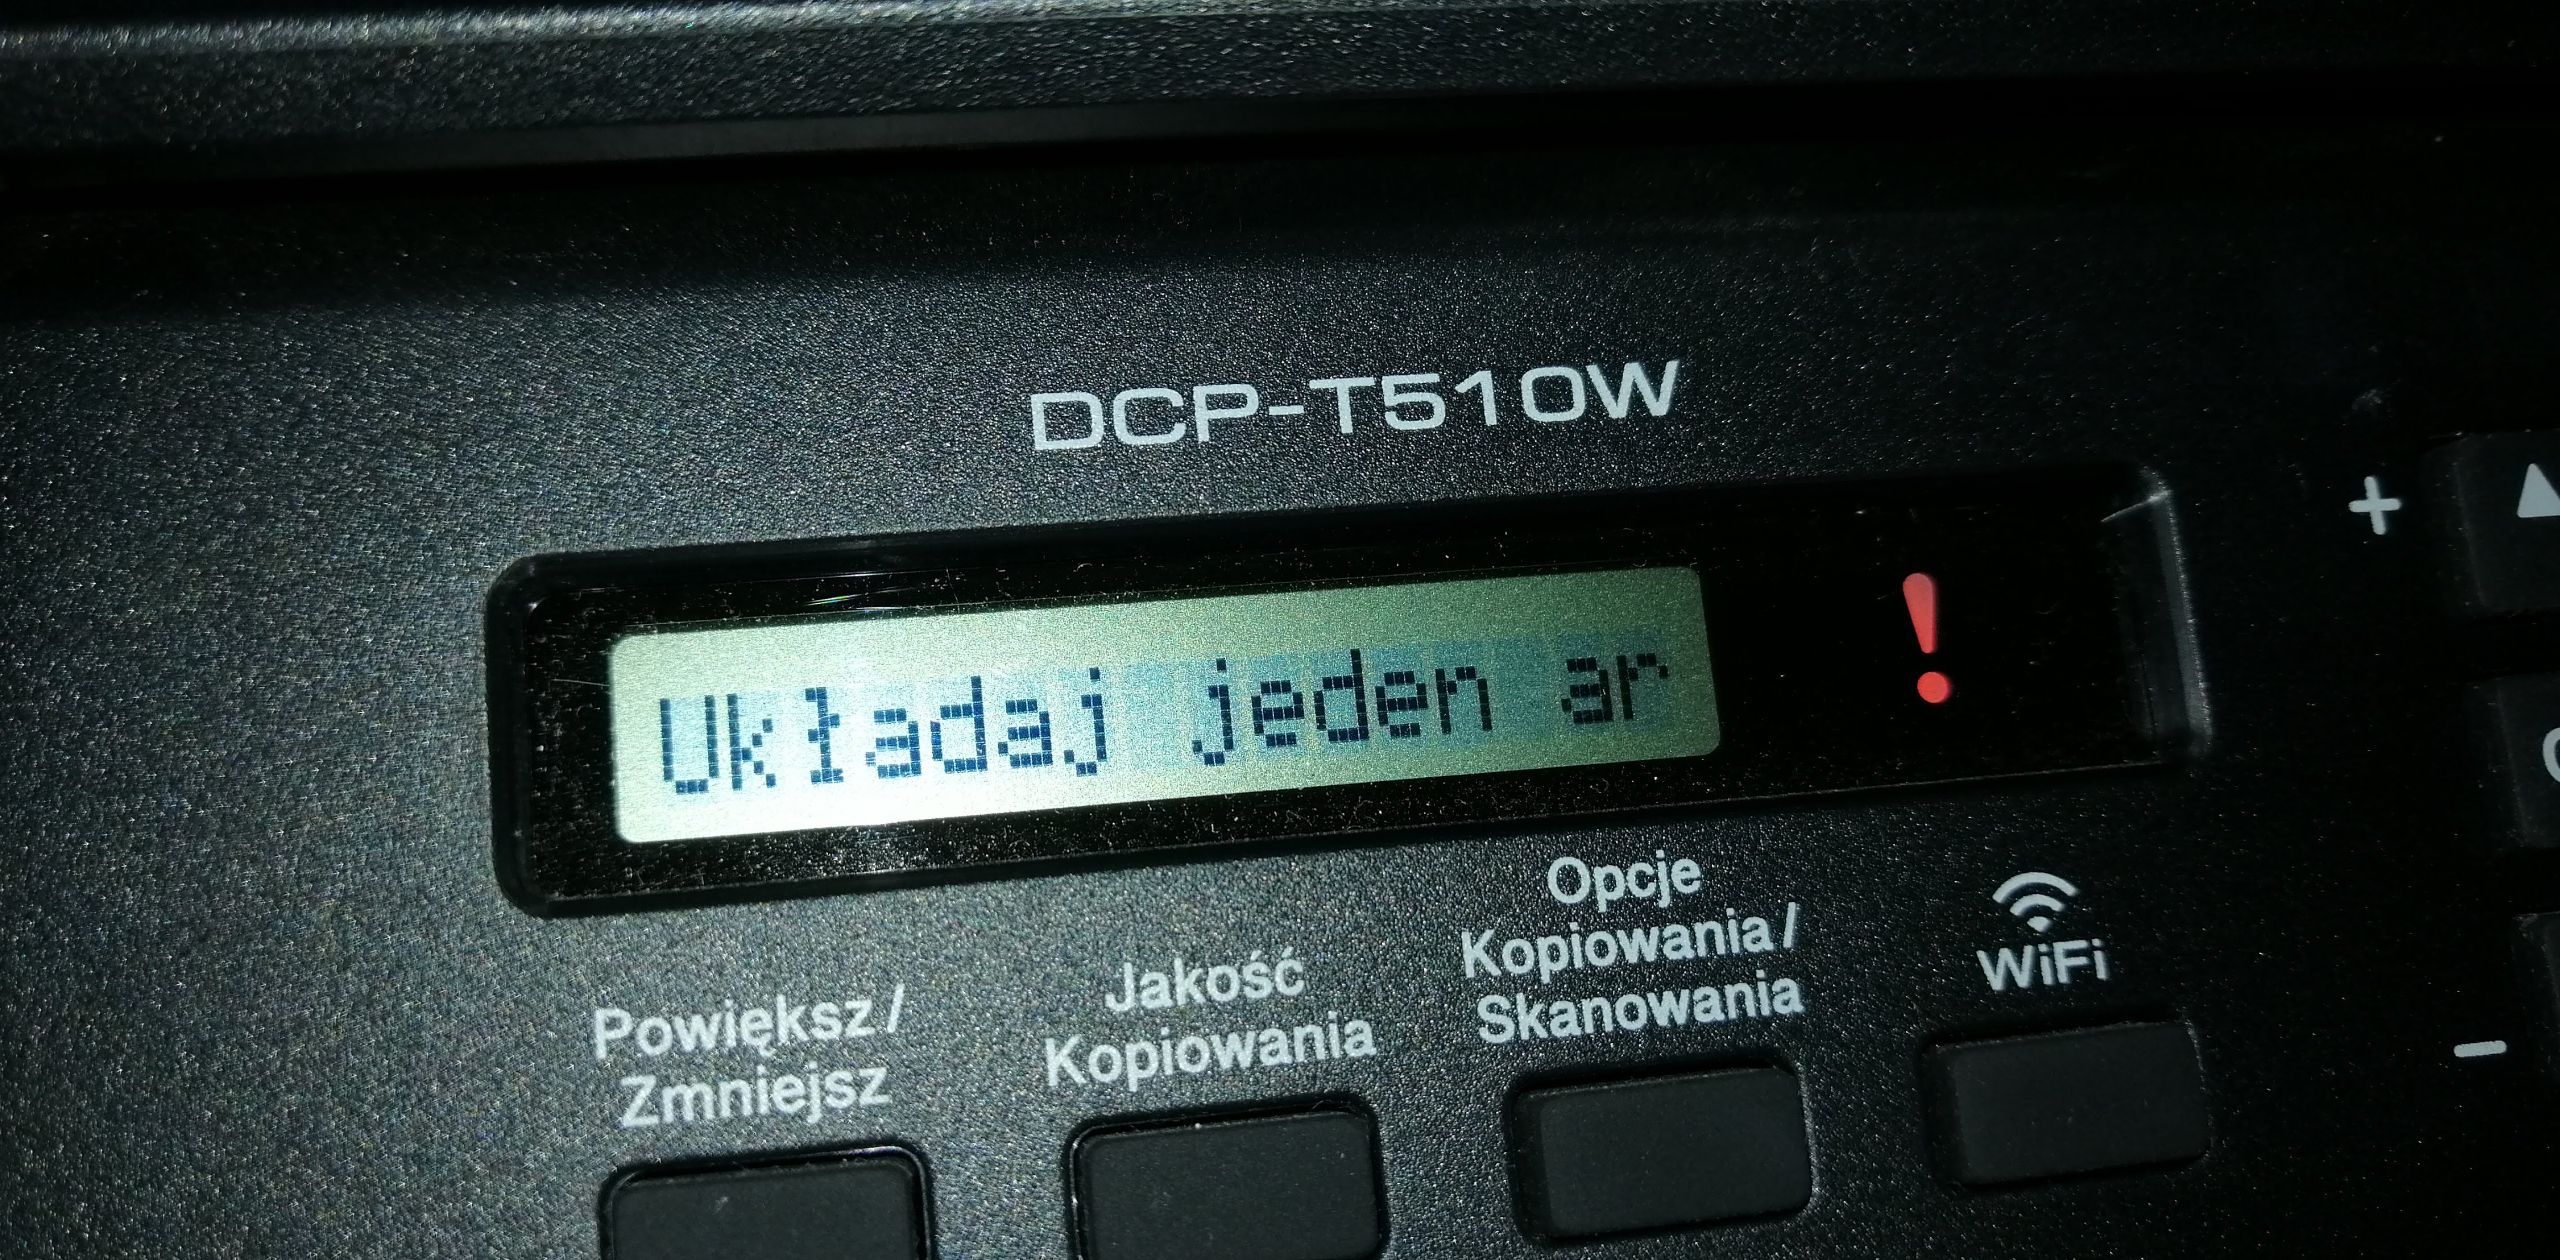 [PL] Recenzja drukarki Brother DCP-T510W